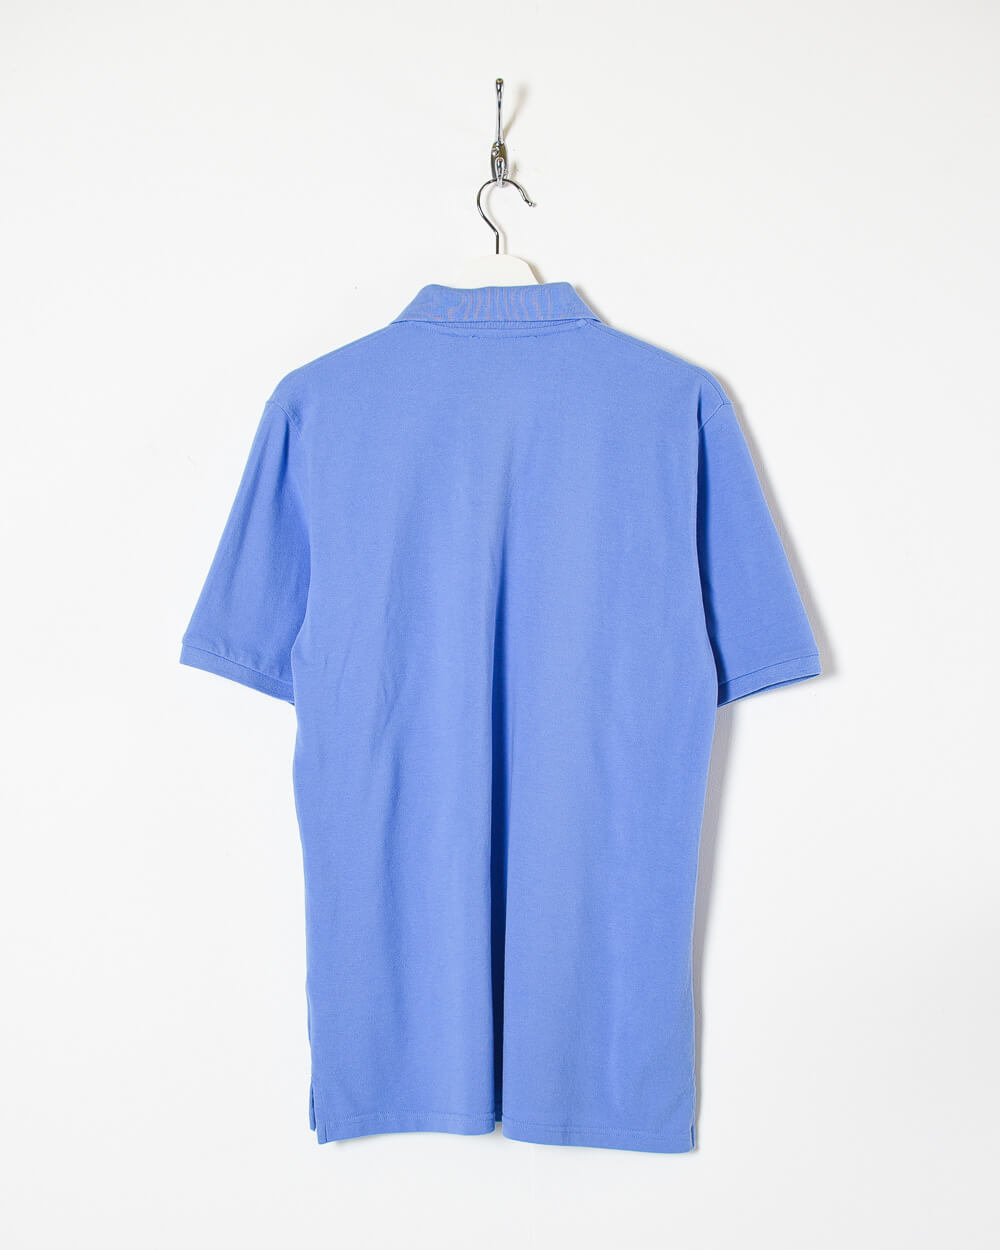 Blue Yves Saint Laurent Polo Shirt - Medium